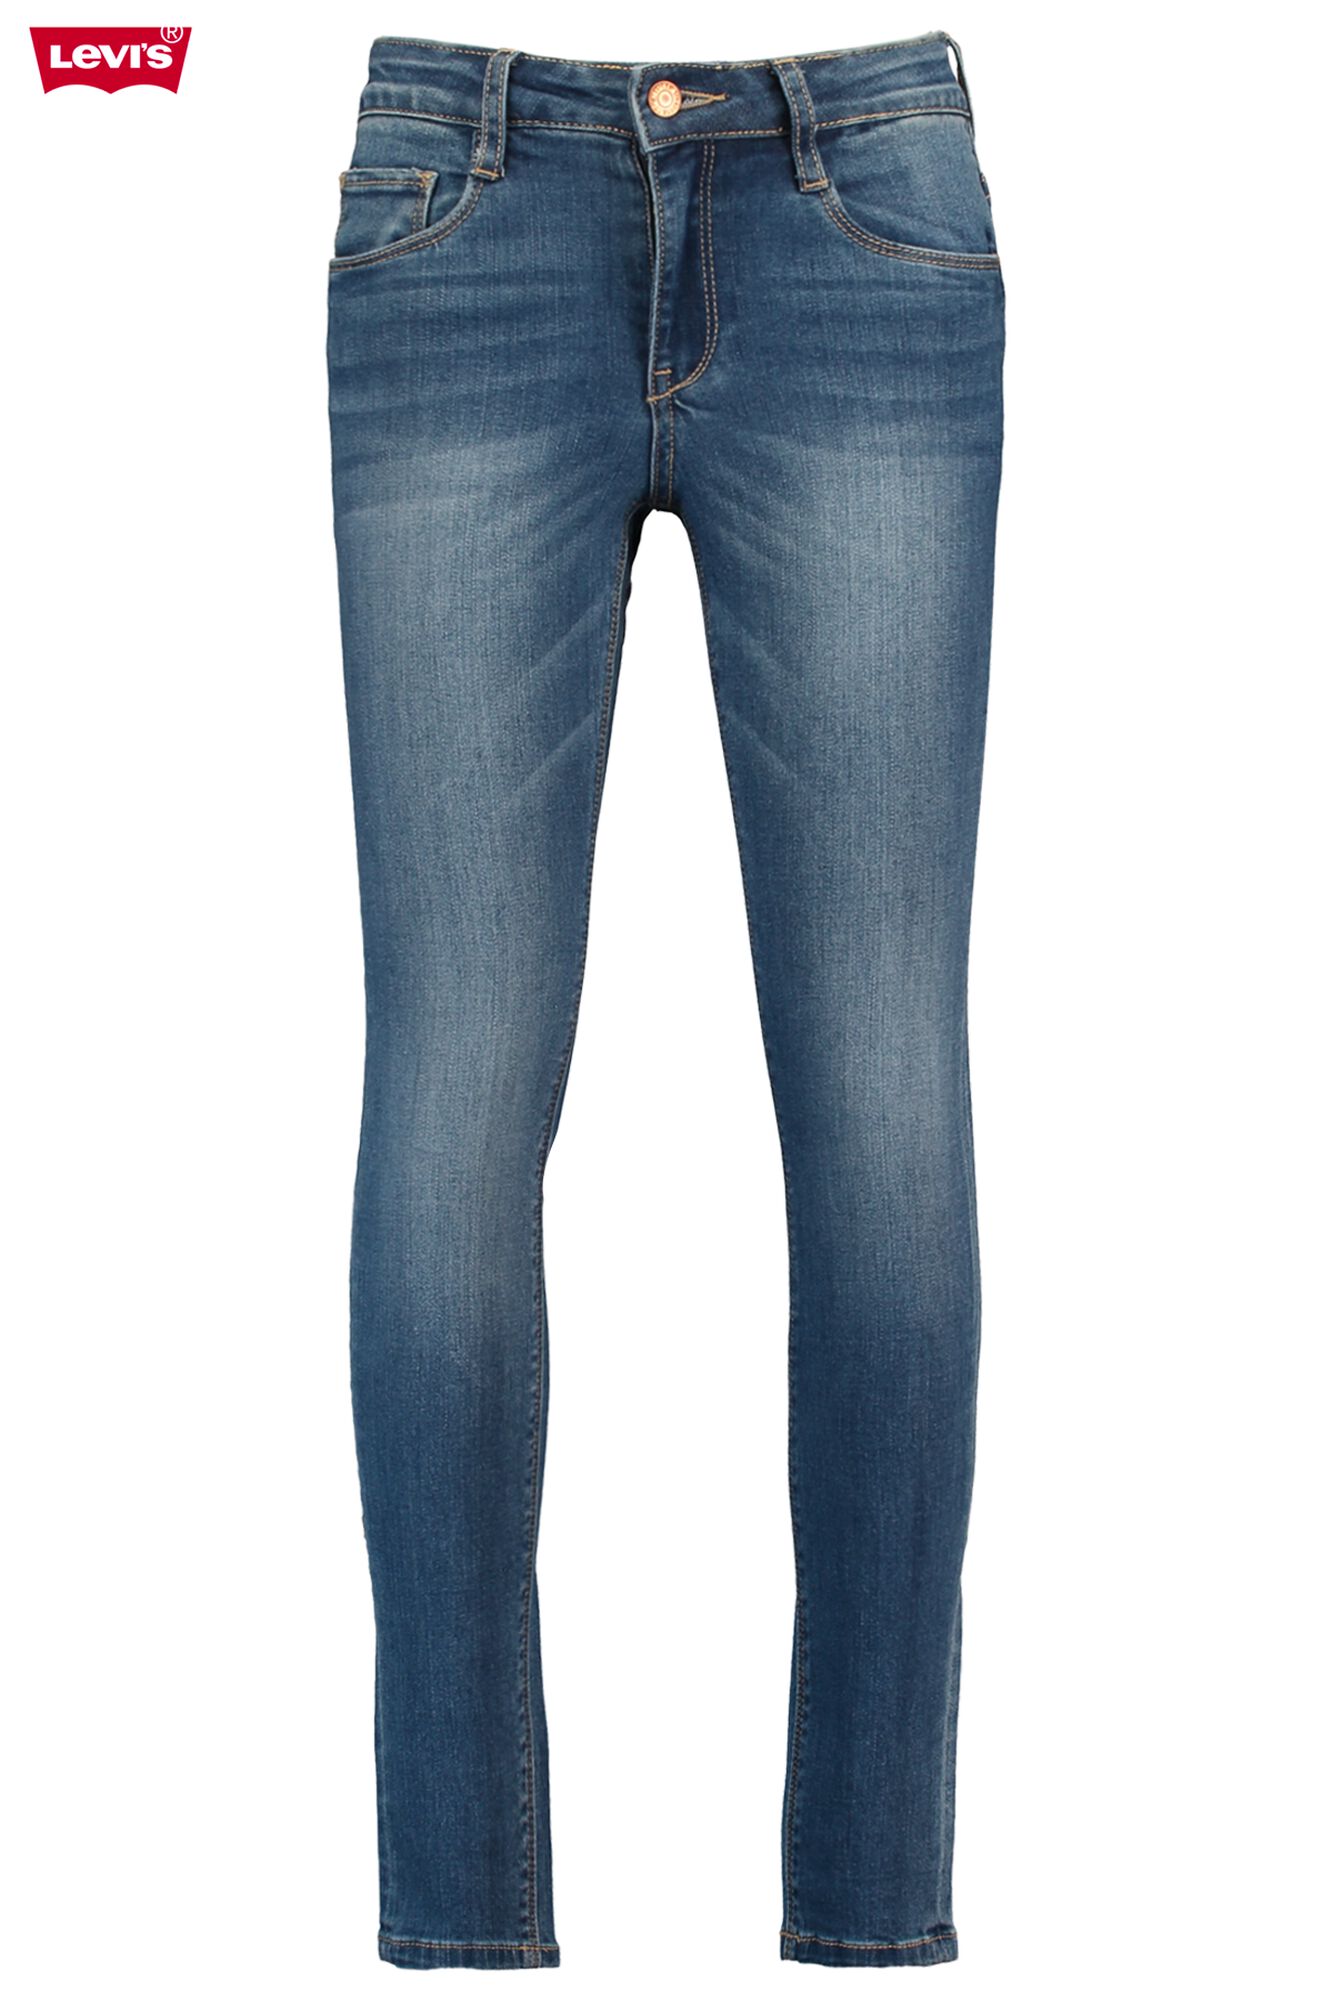 Girls Jeans Levi's 721 Skinny high rise Blue Buy Online